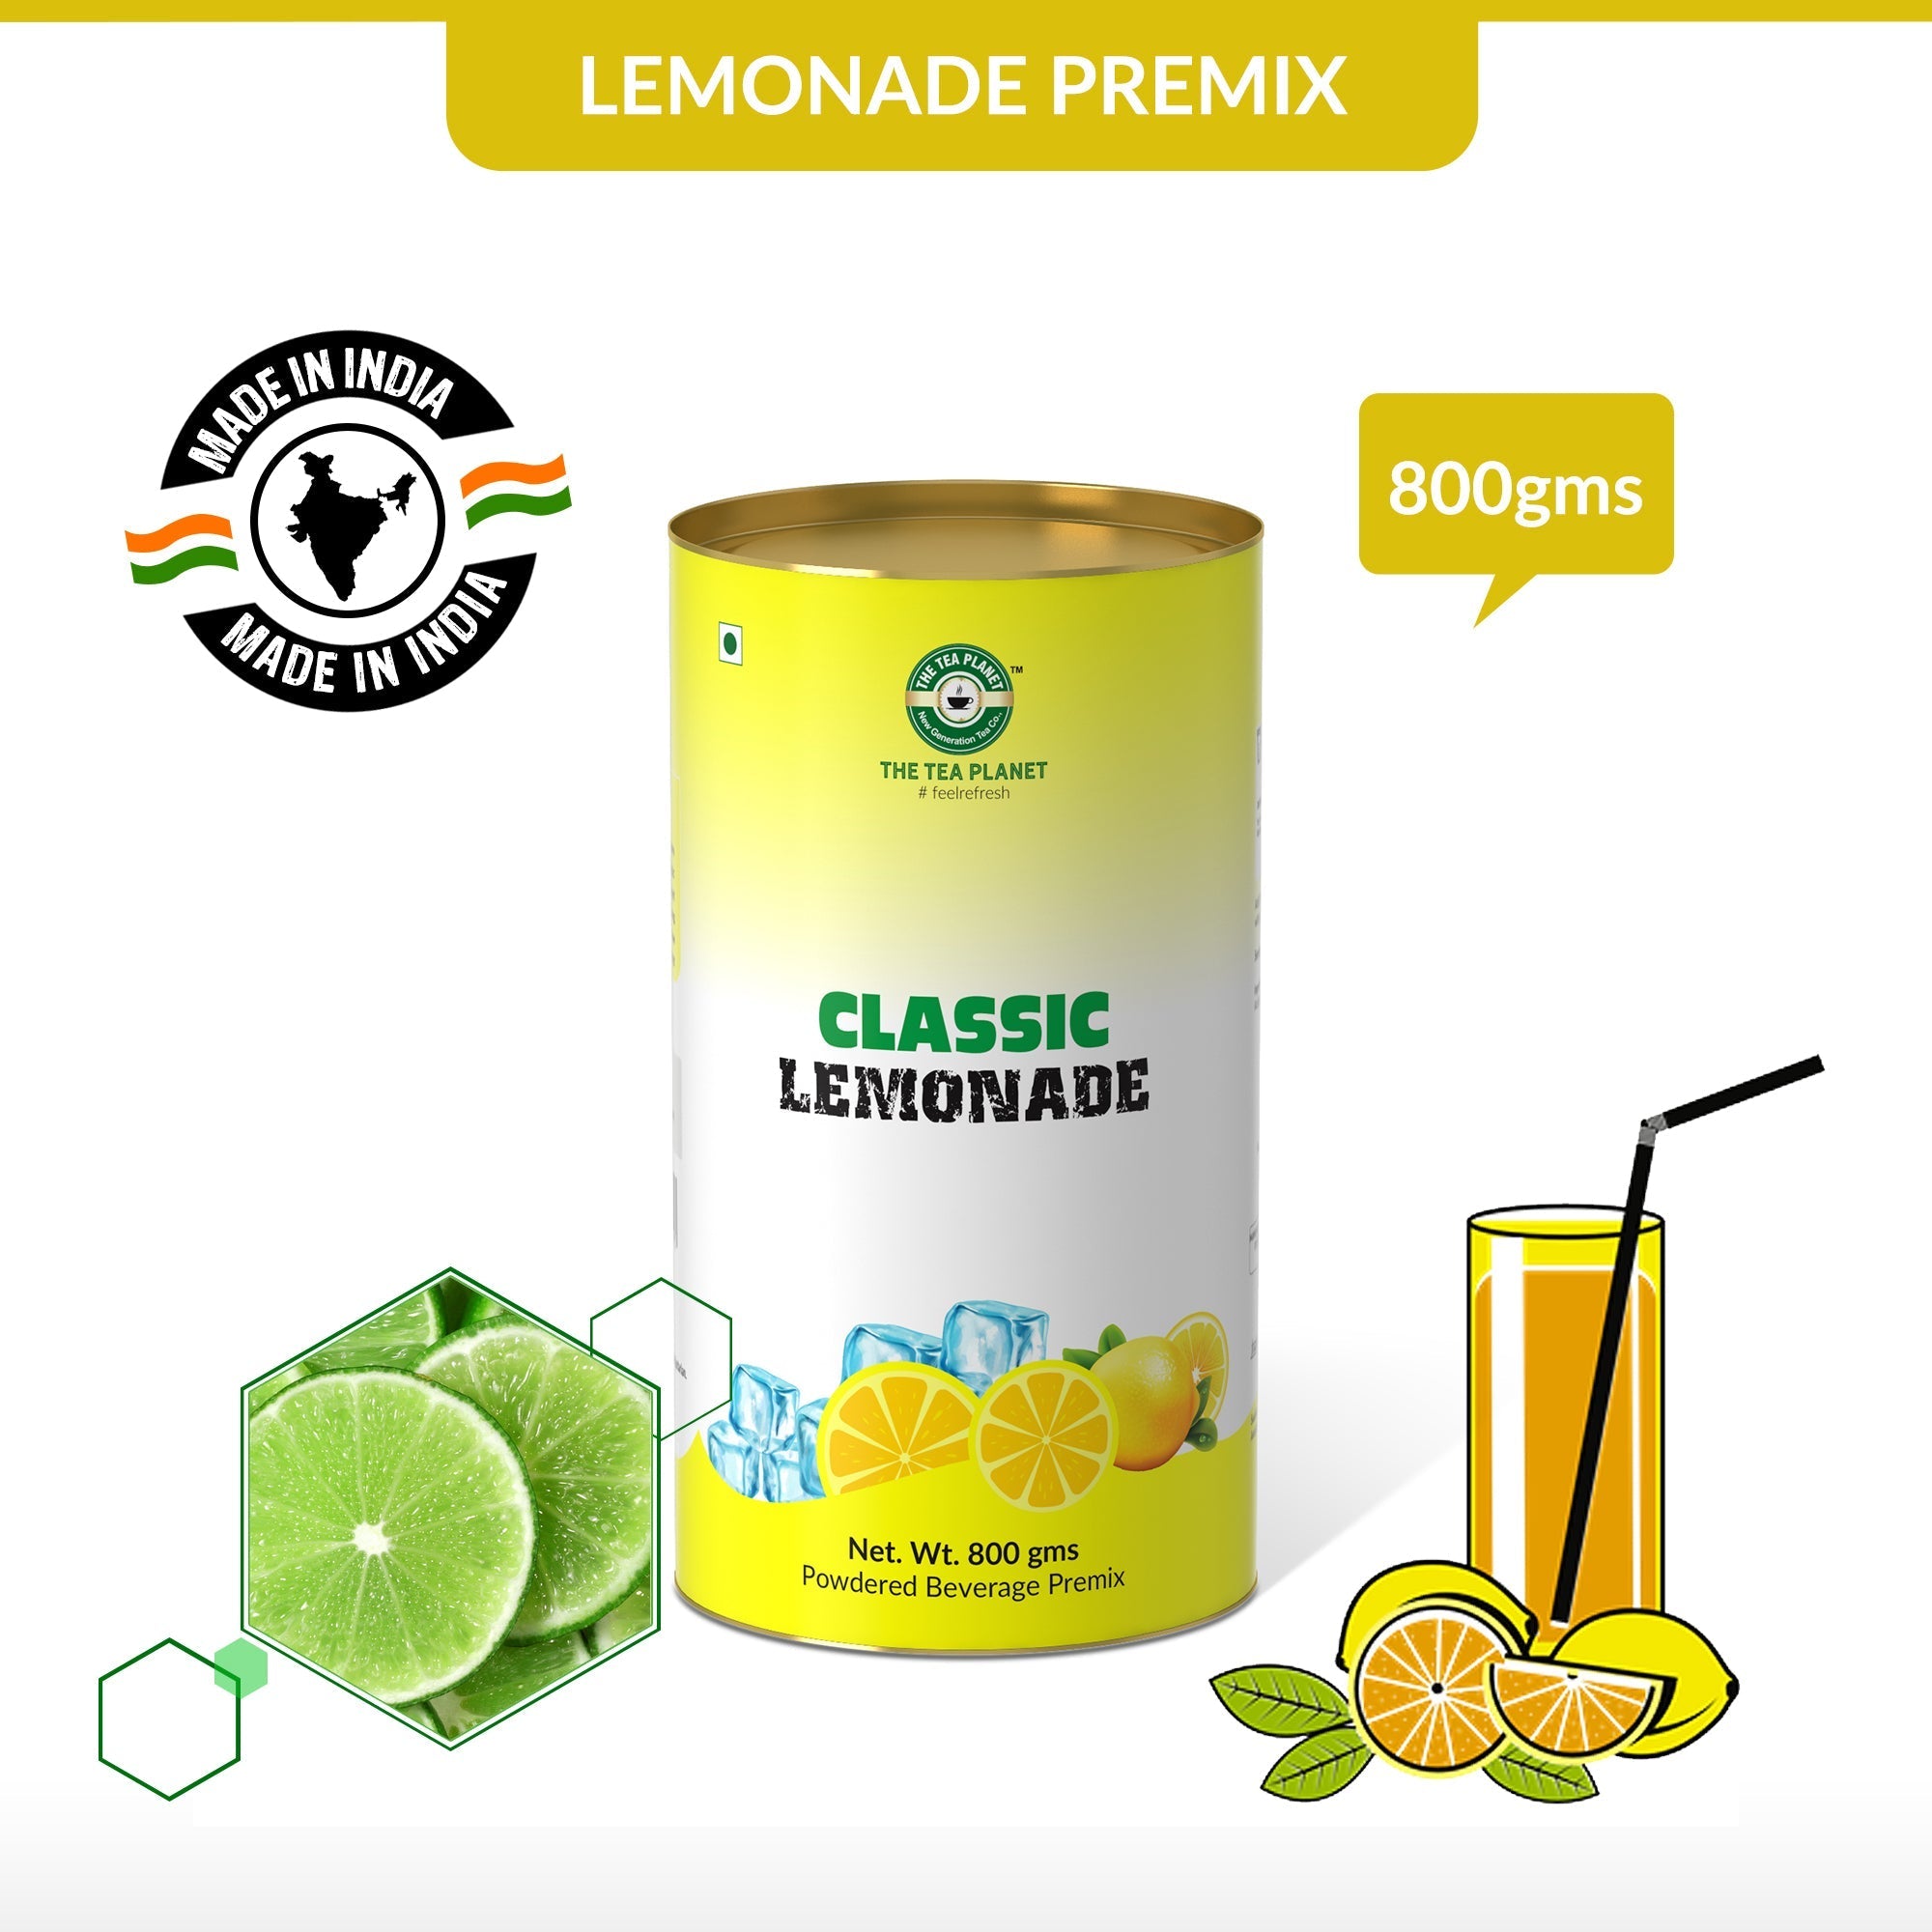 Classic Lemonade Premix - 800 gms